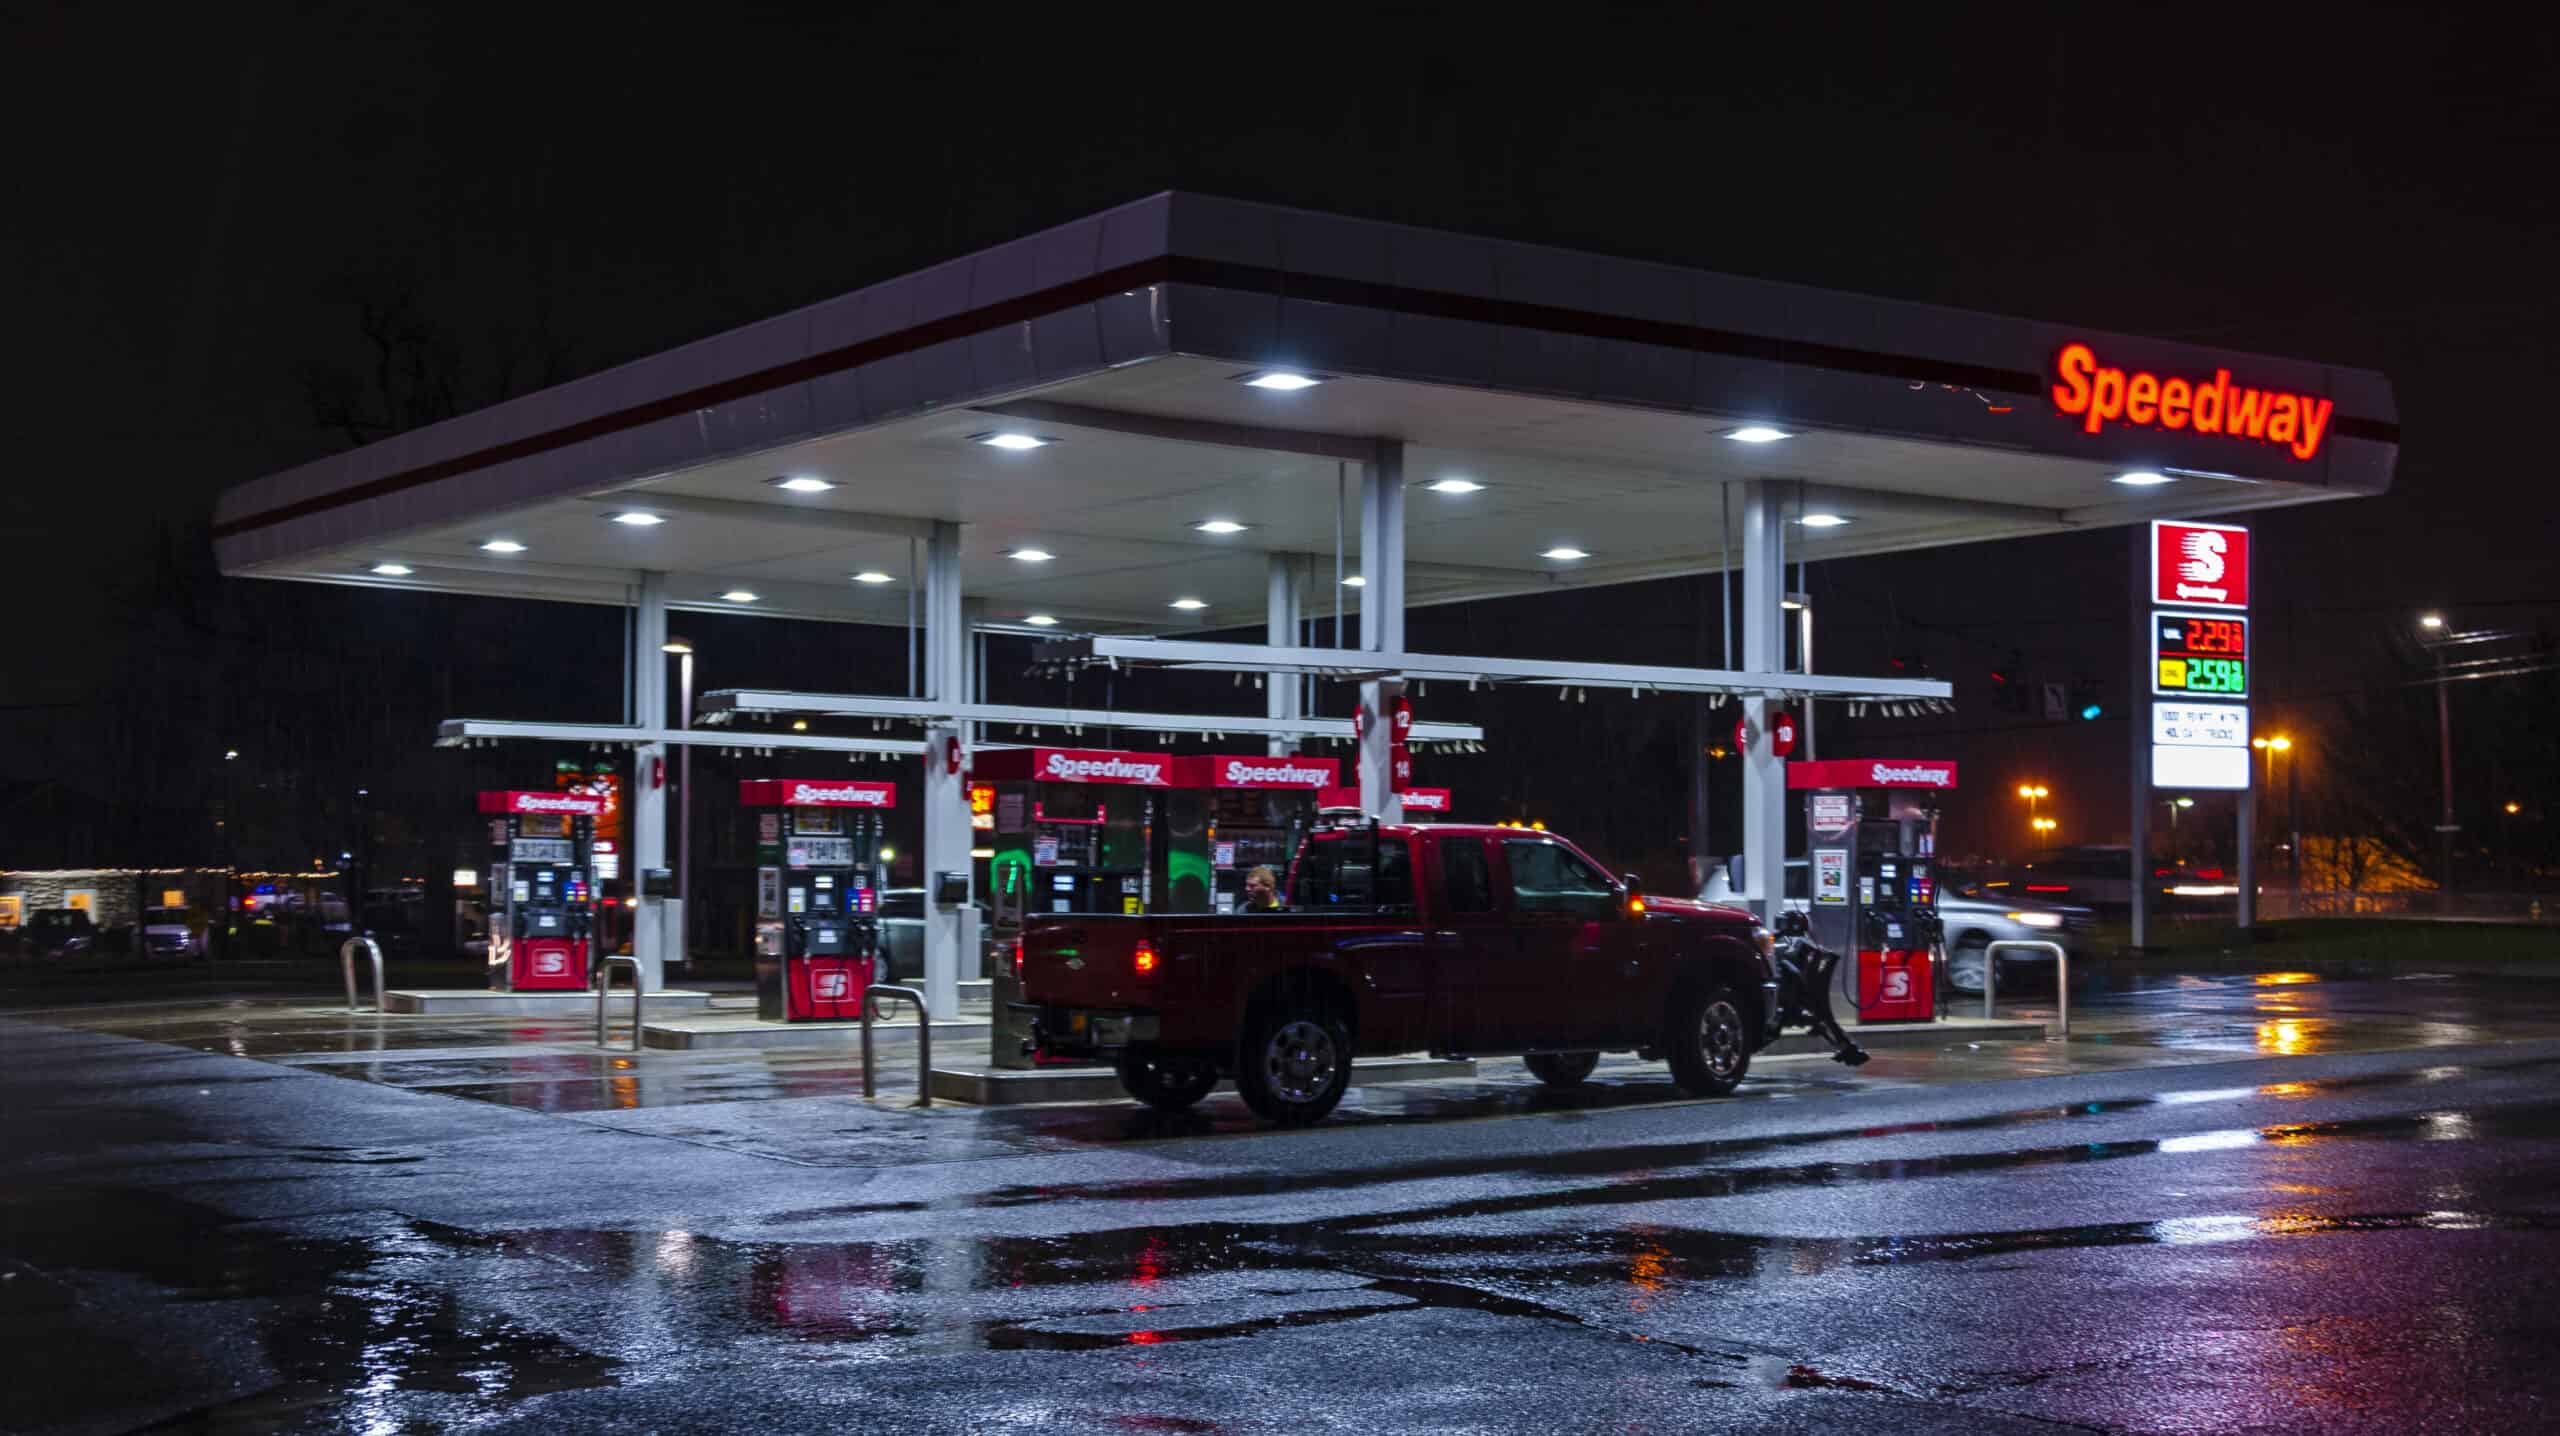 Speedway gas station by Daniel Case